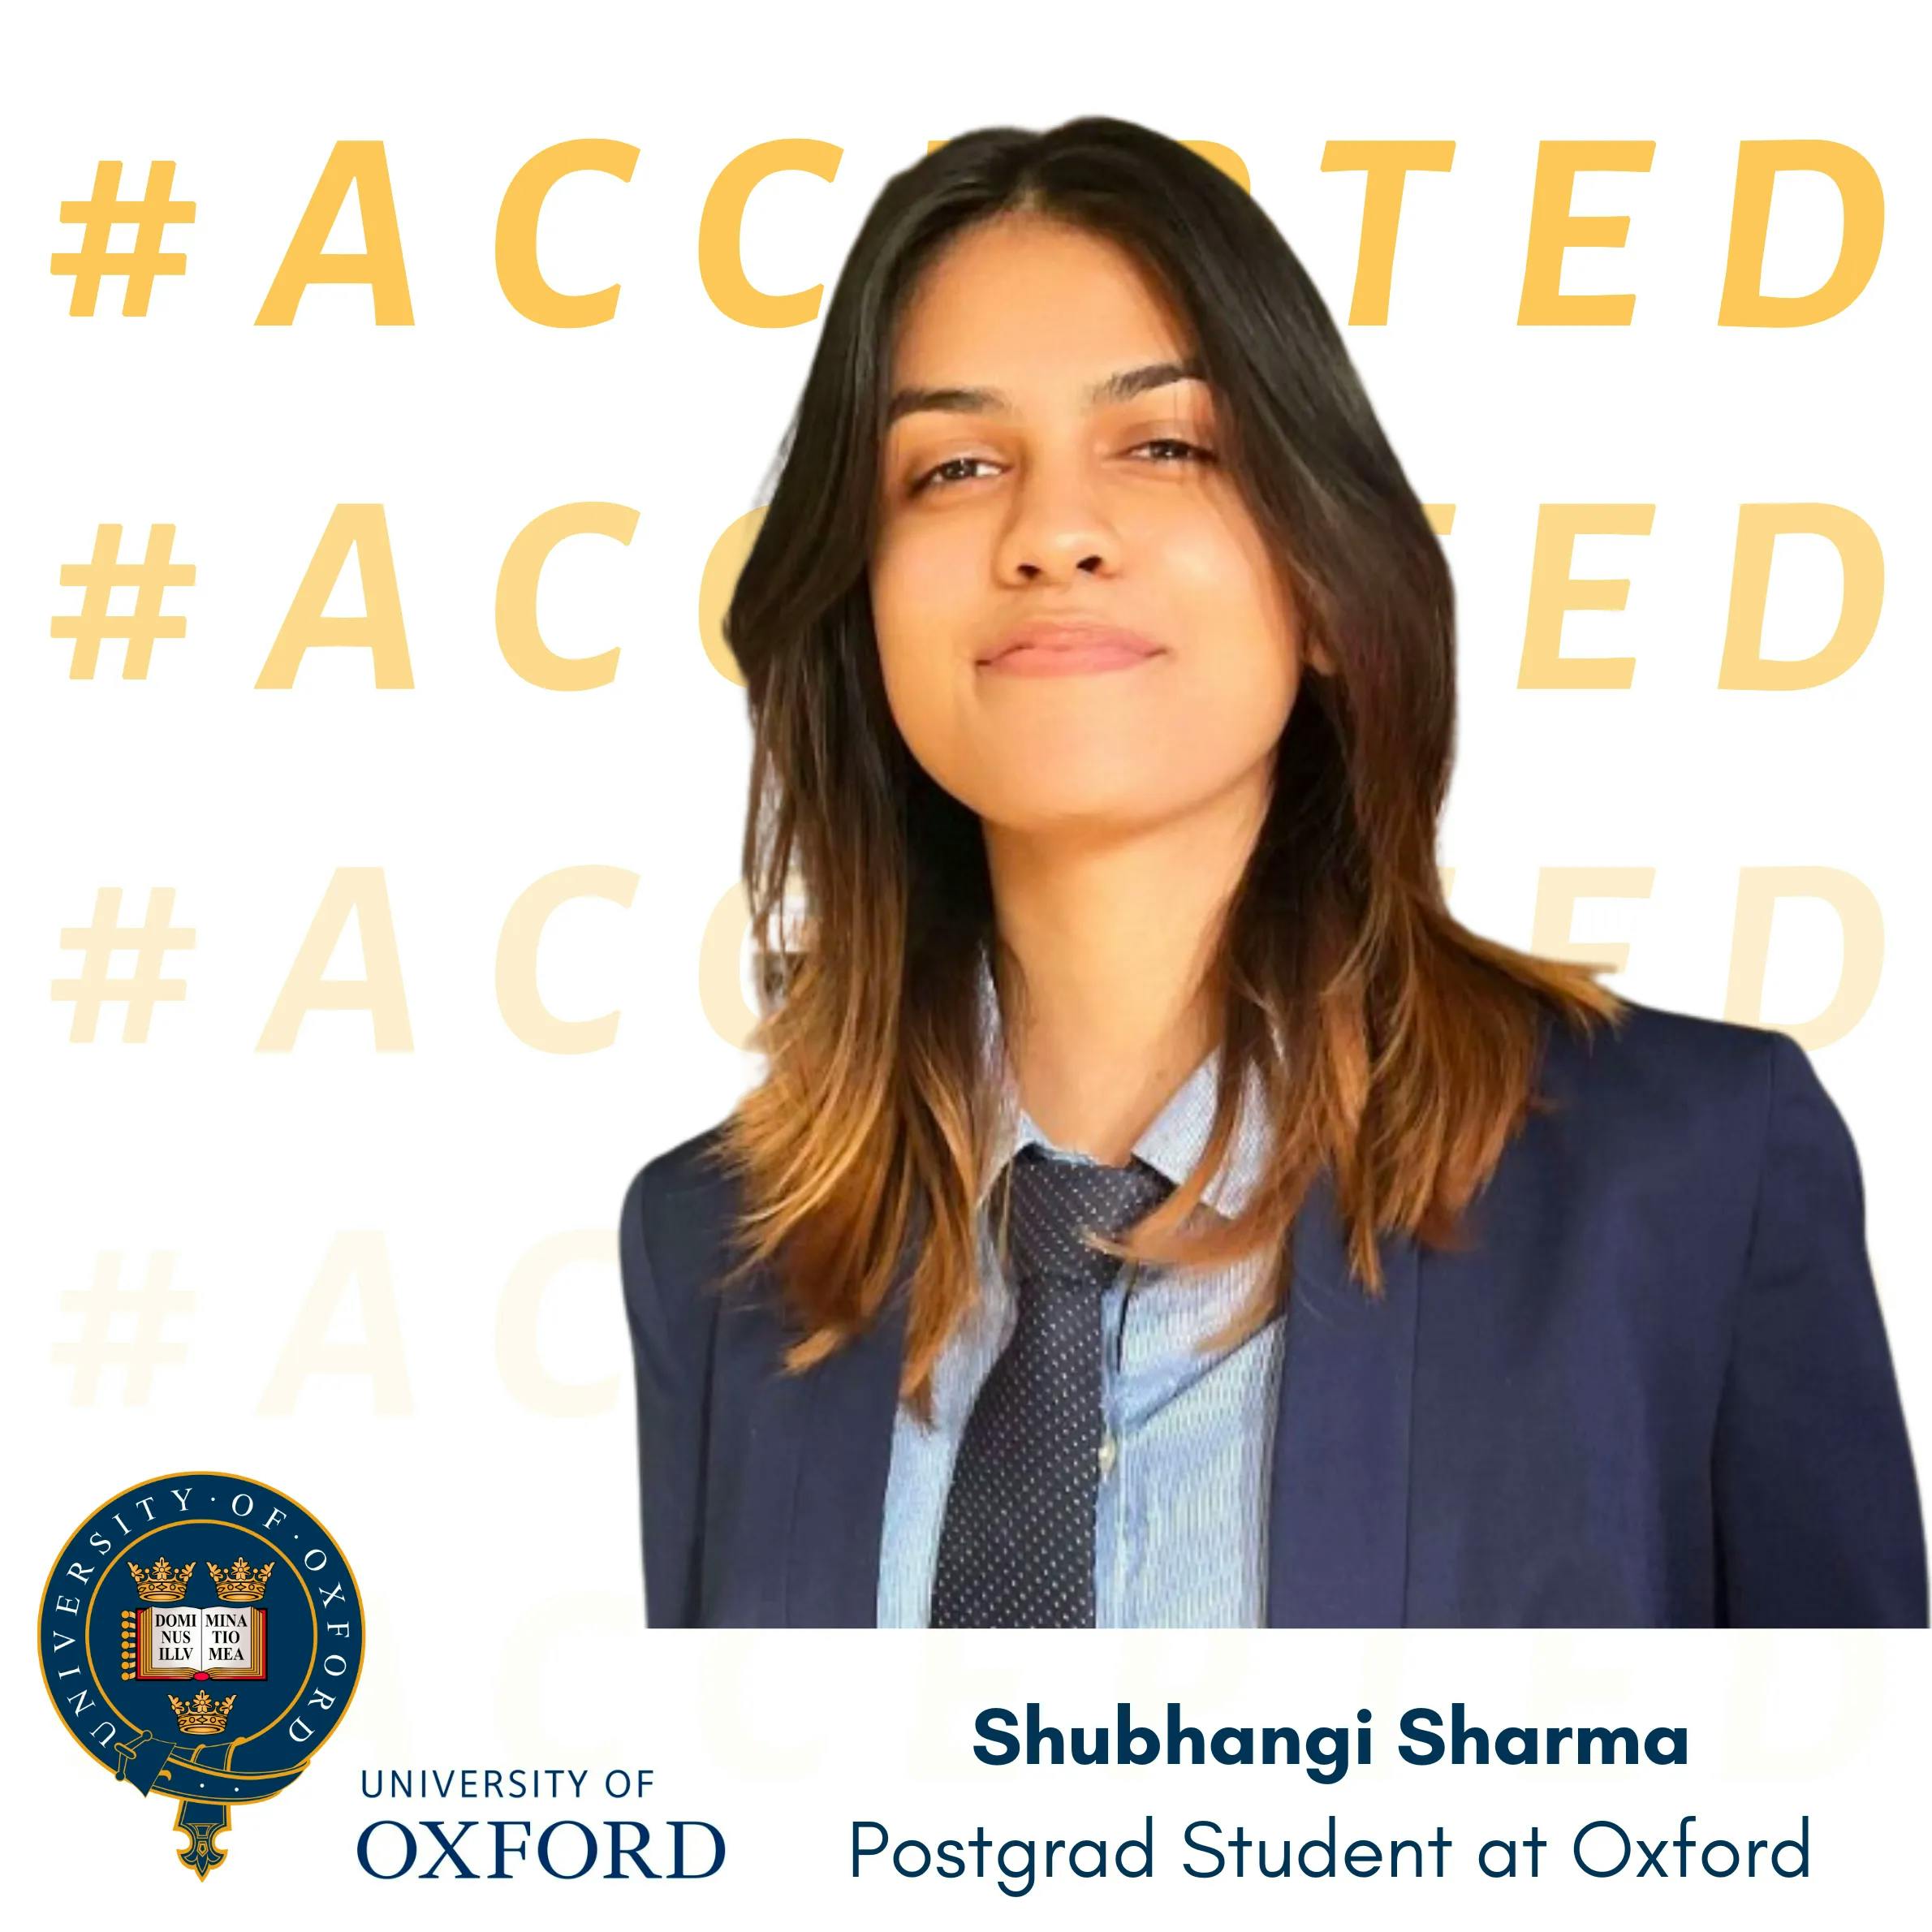 Shubhangi Sharma admitted to Oxford University